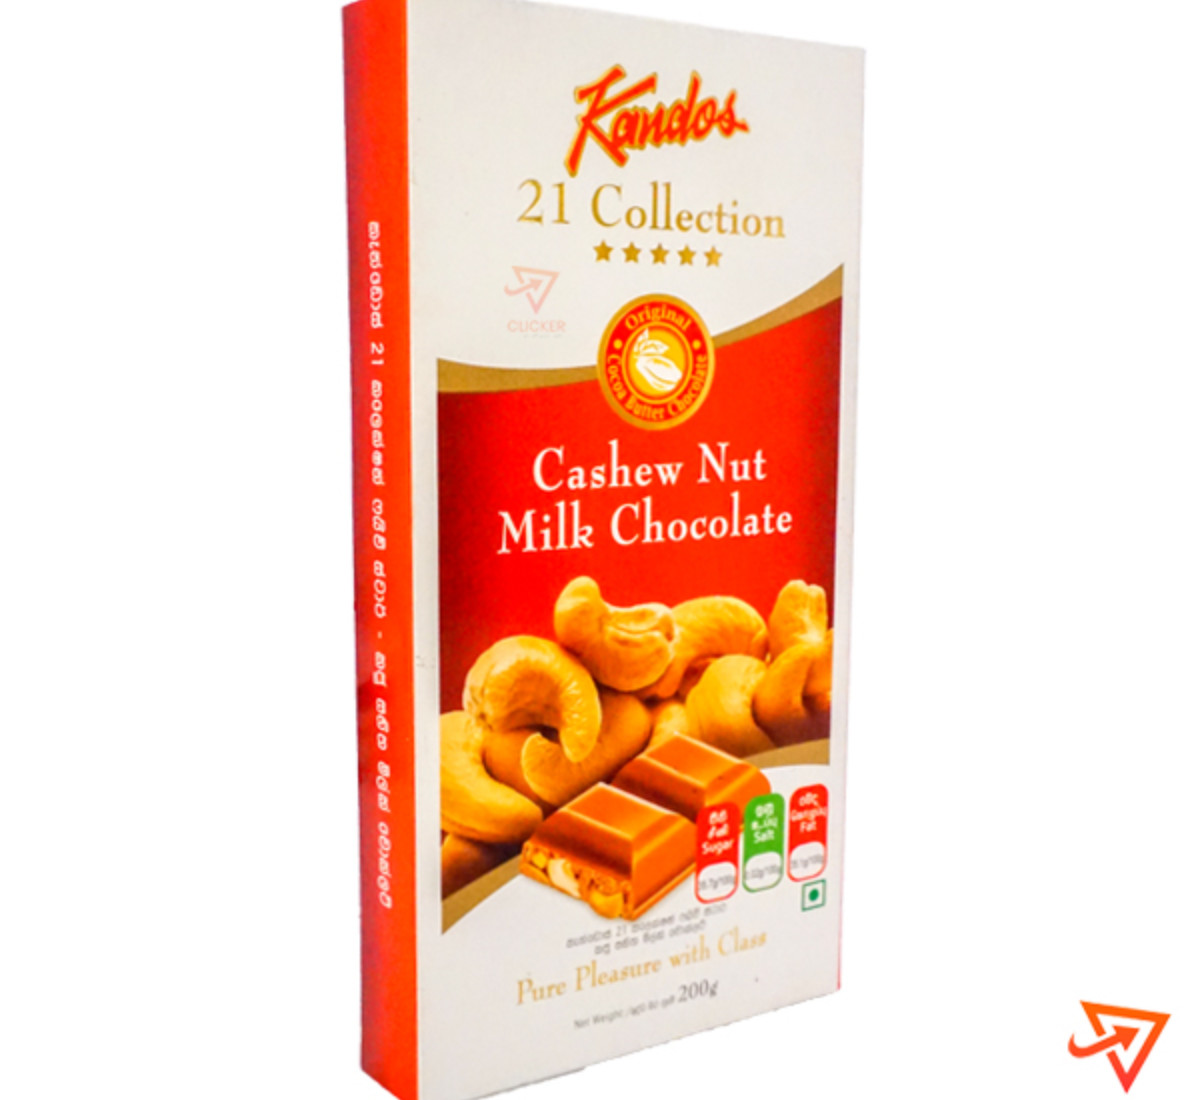 Clicker product 200g Kandos cashew nut Milk Chocolate 1159